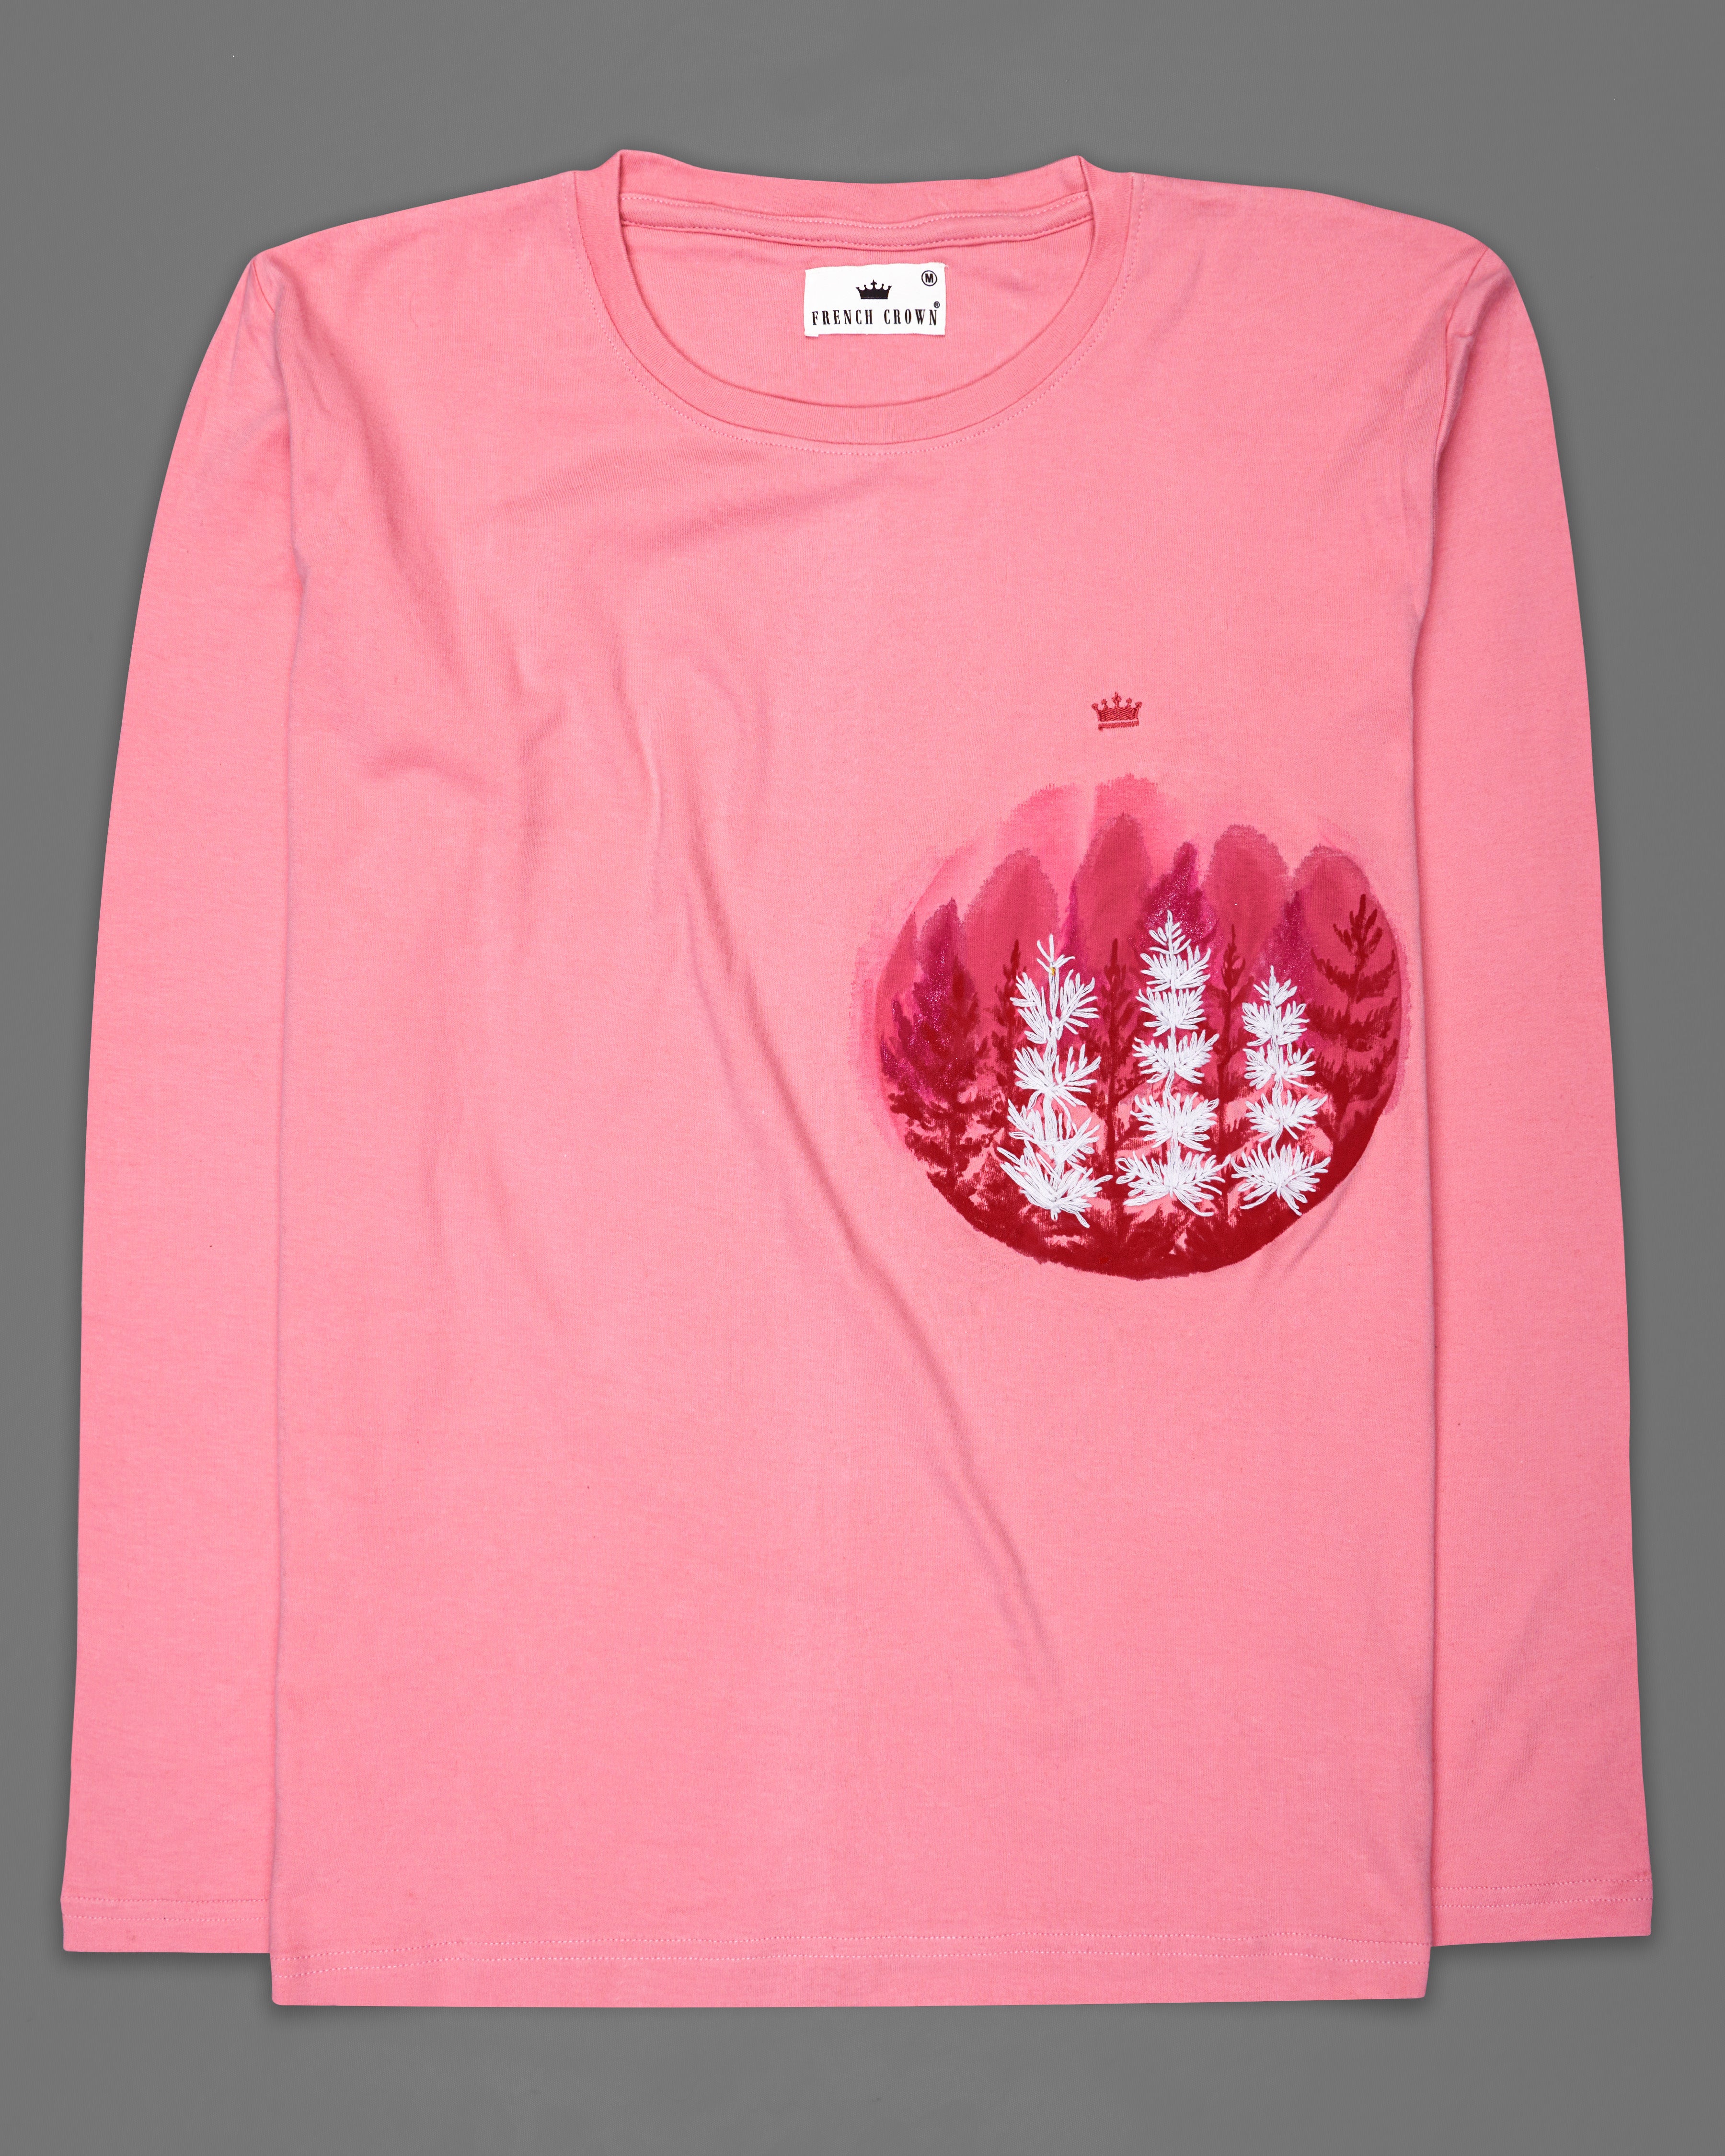 Sundown Pink with Trees Hand Painting and Hand Stitched Work Organic Cotton T-shirt TS117-W01-S, TS117-W01-M, TS117-W01-L, TS117-W01-XL, TS117-W01-XXL